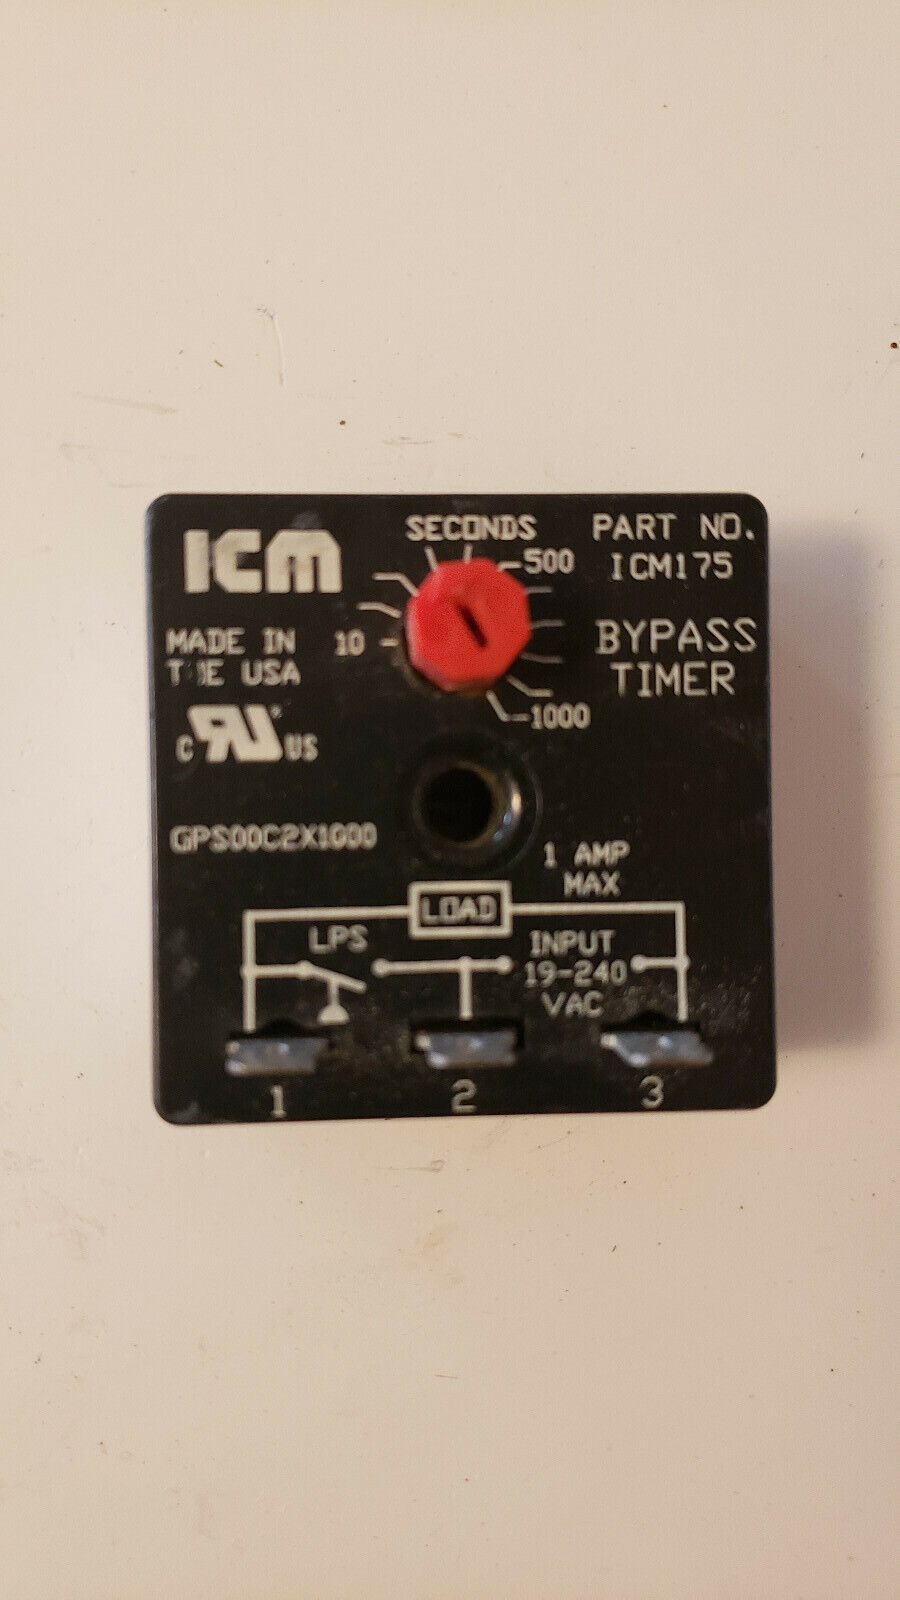 ICM 175  ICM JCI Bypass Timer ($13.00)